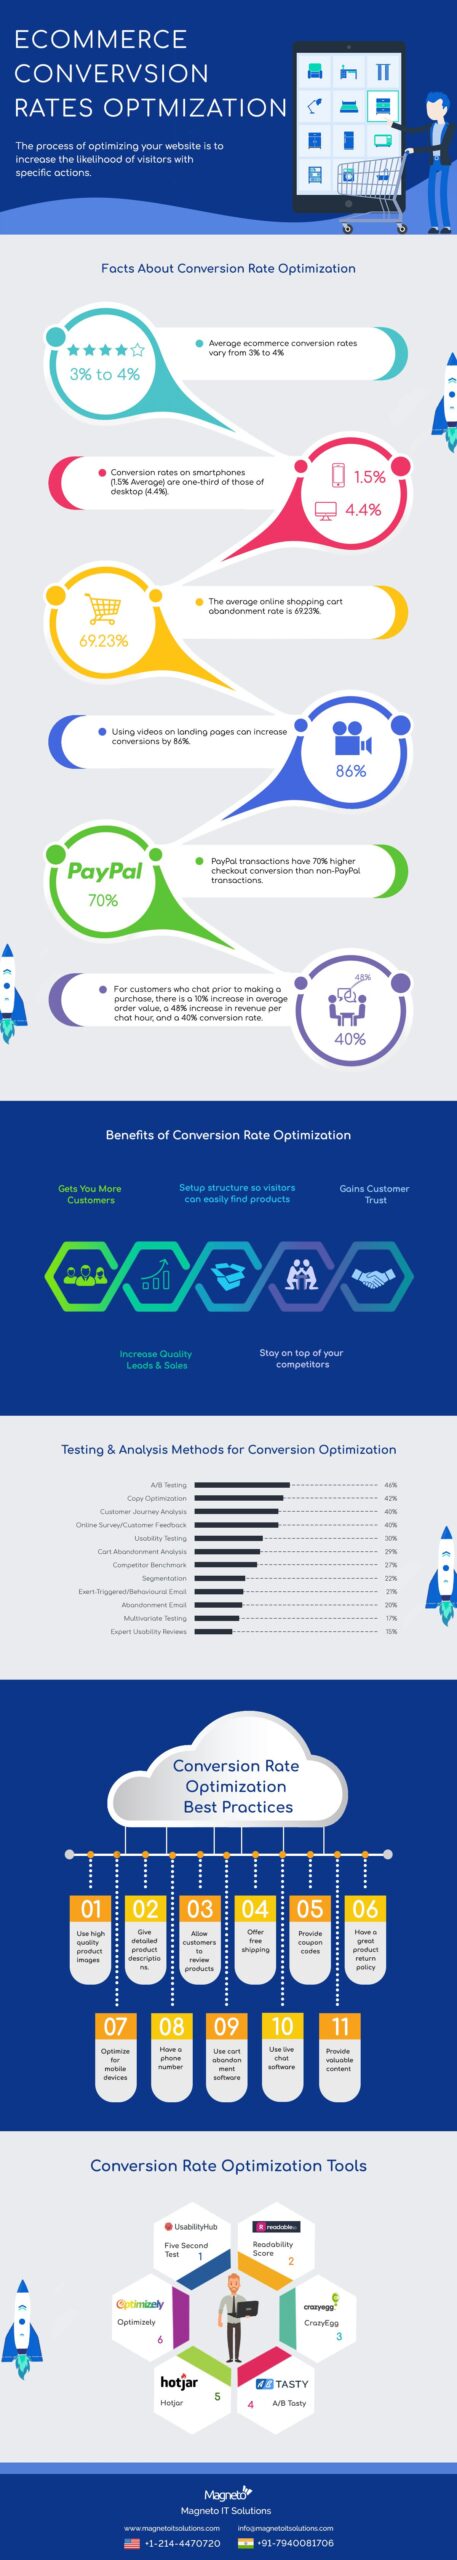 eCommerce conversion rates optimization